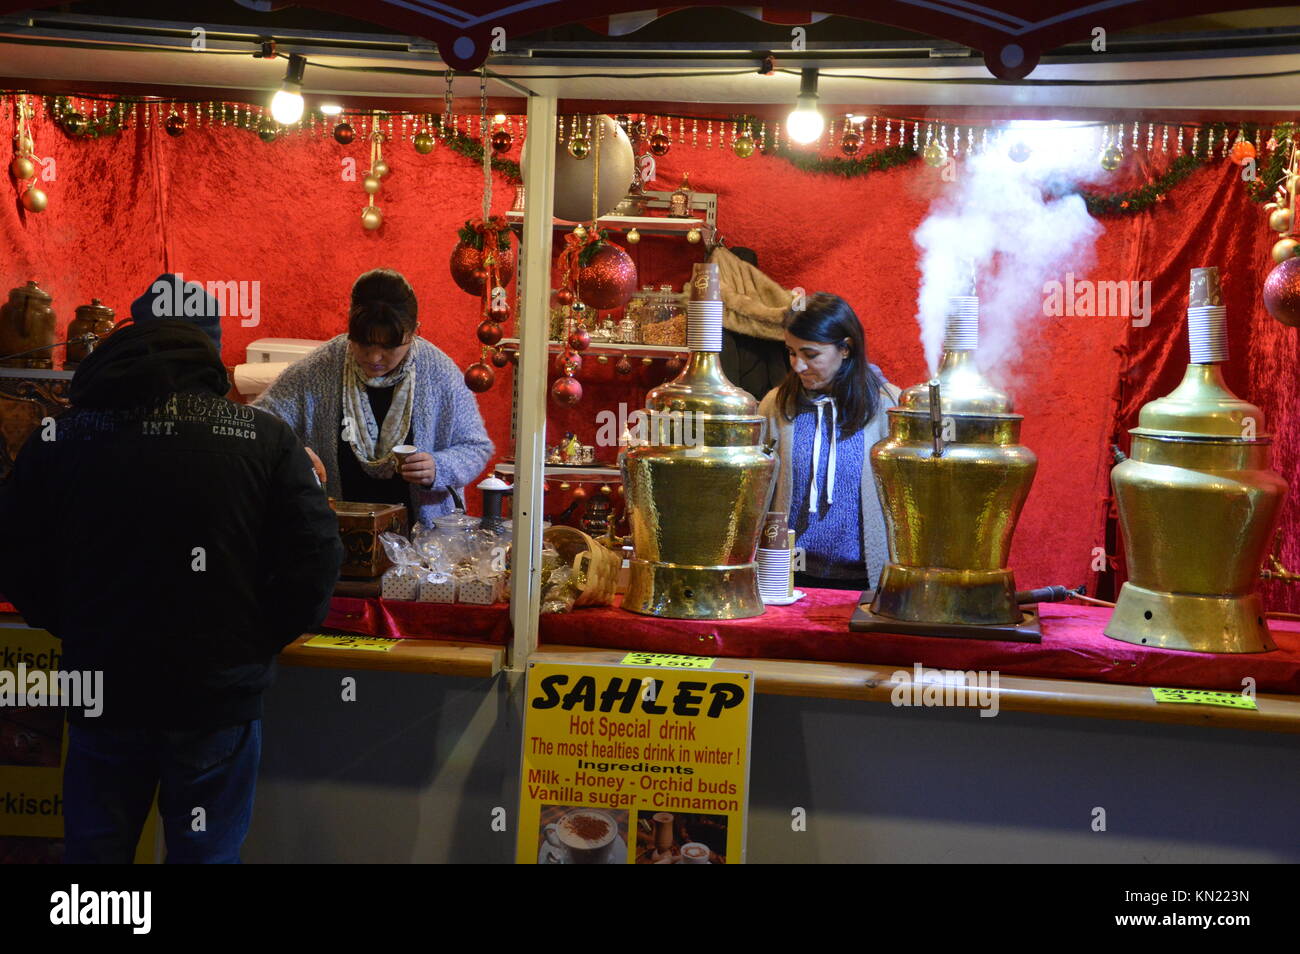 Berlín, Alemania. 09Dec, 2017. Mercado navideño en la plaza Alexanderplatz, en Berlín, Alemania. Crédito: Markku Rainer Peltonen/Alamy Live News Foto de stock